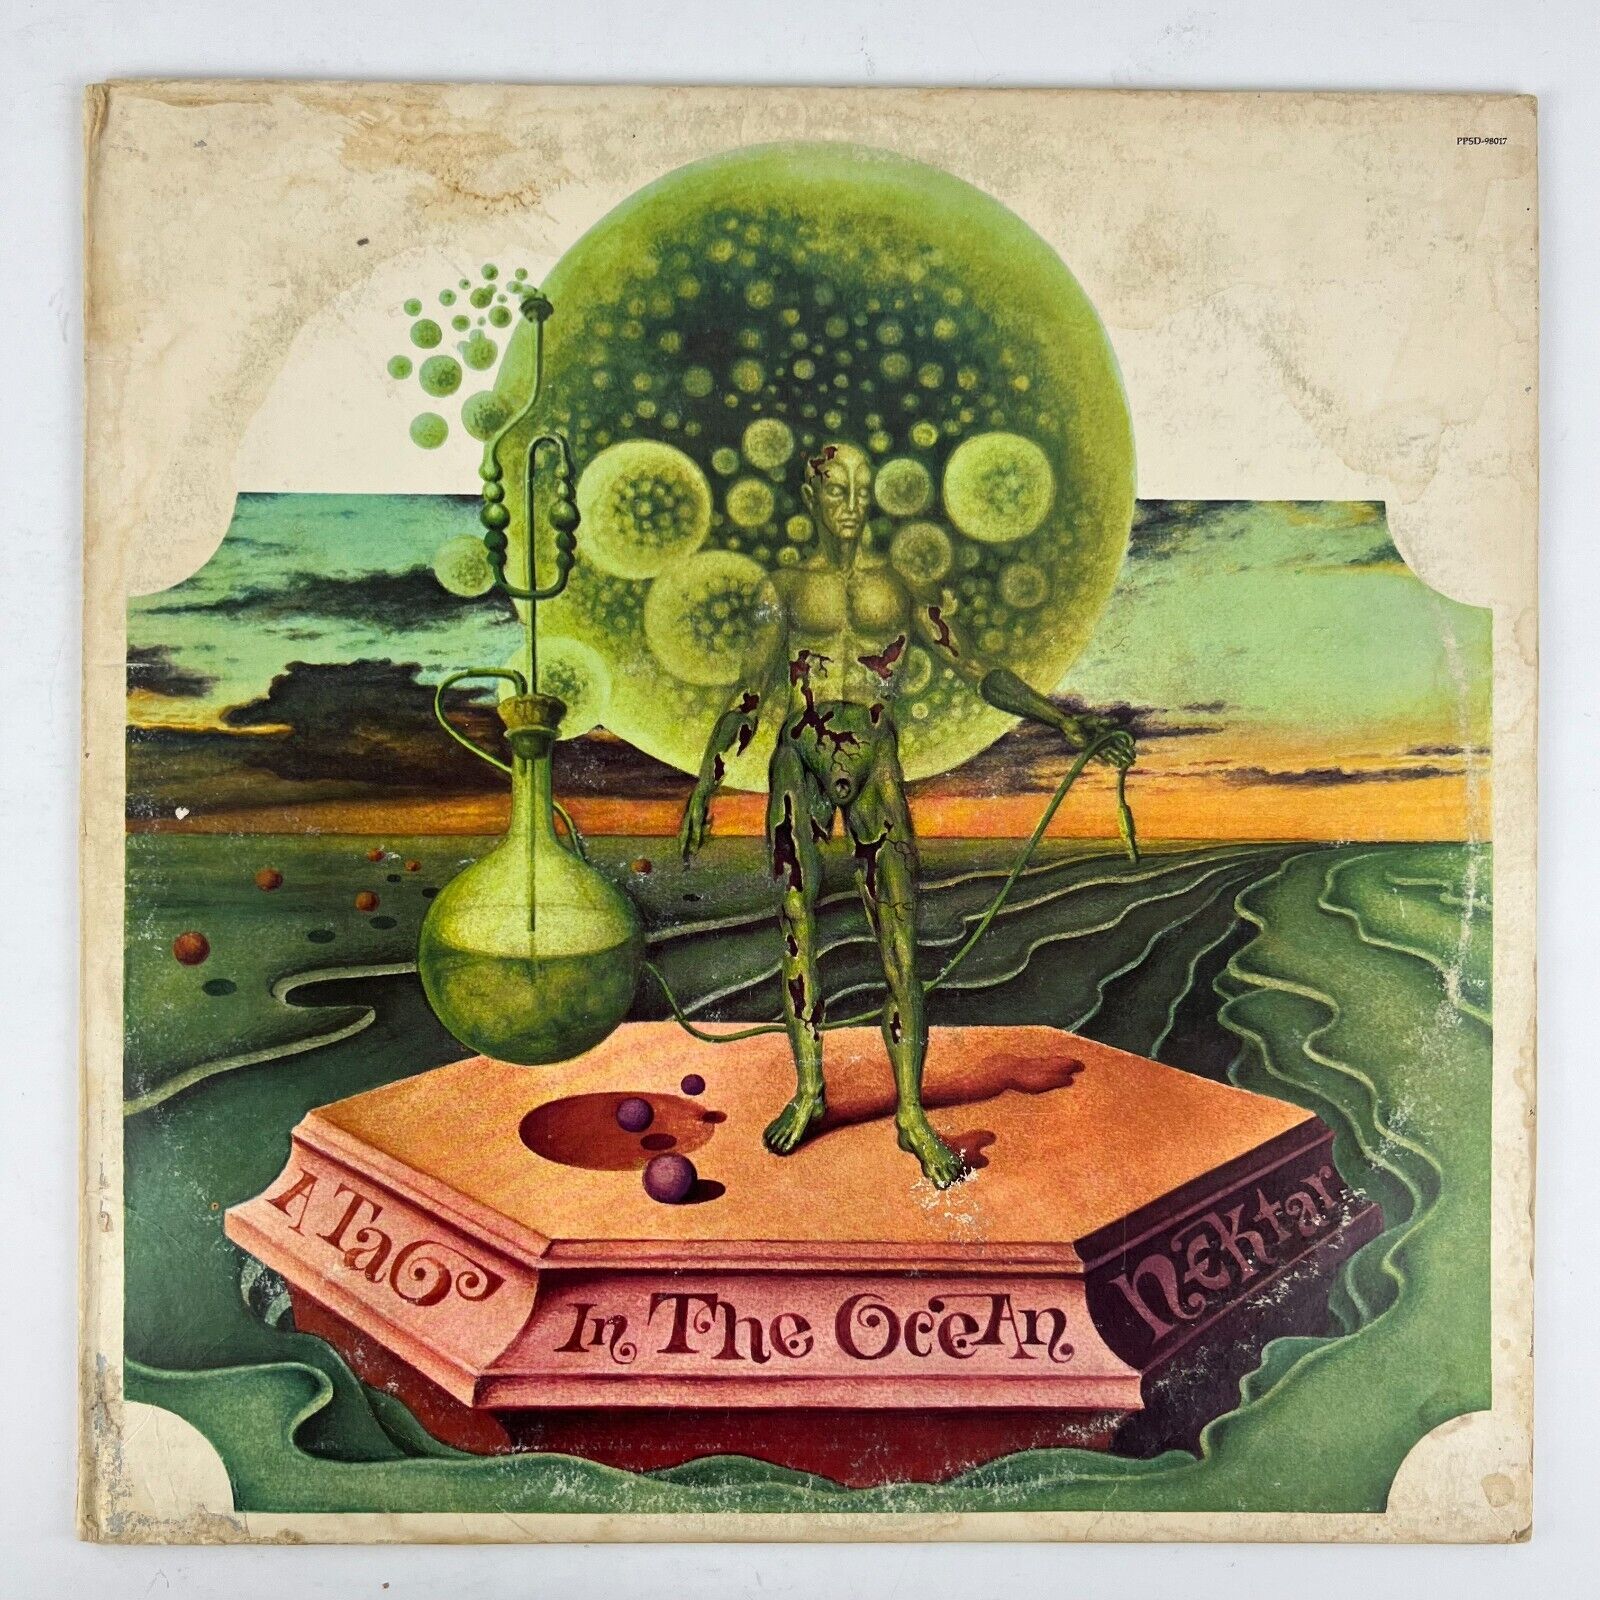 Nektar – A Tab In The Ocean Vinyl LP Record Album PPSD-98017